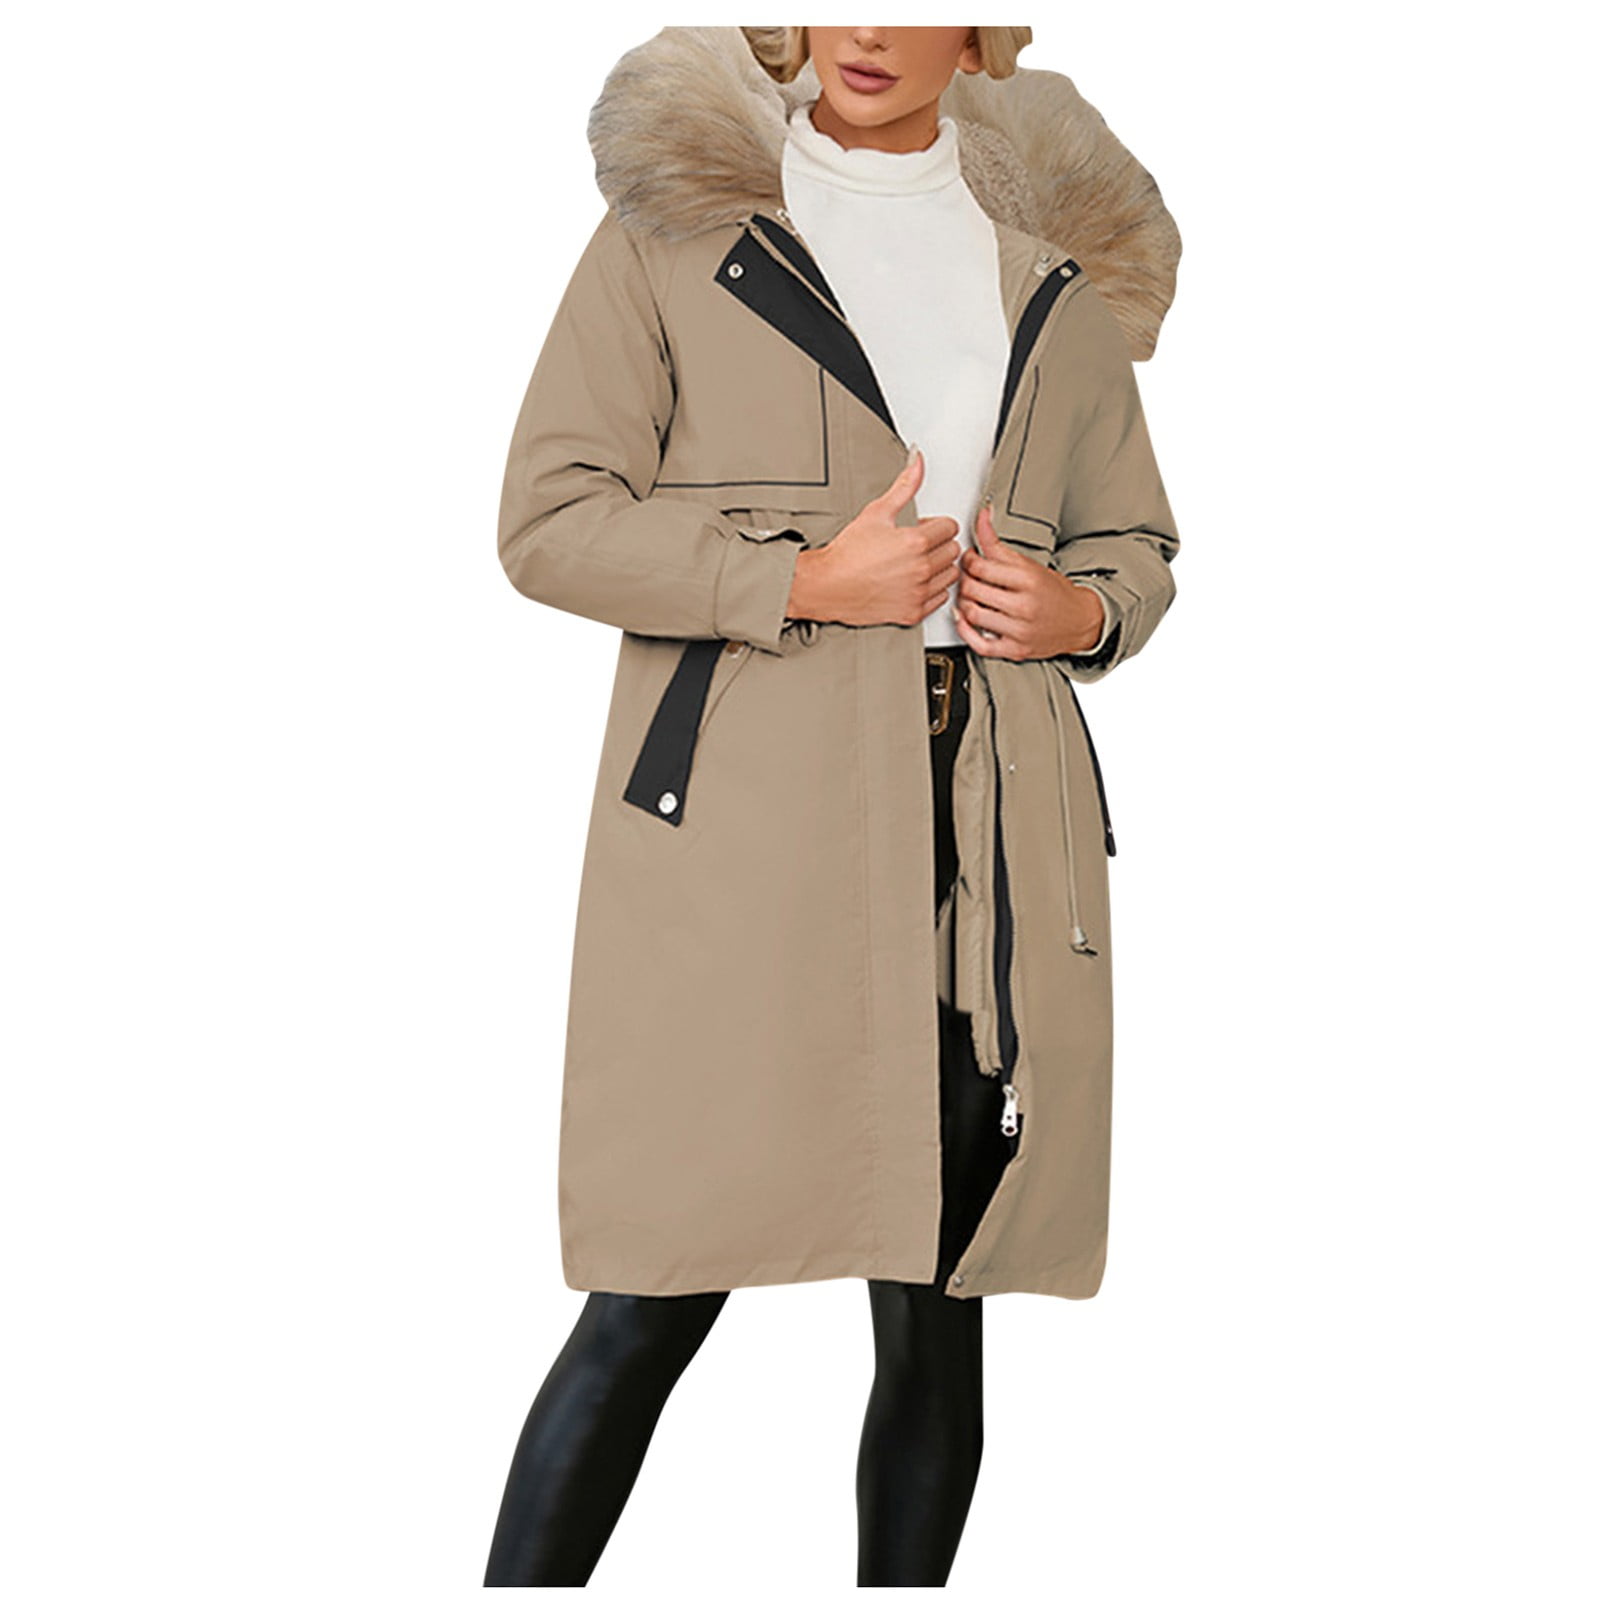 Synthetic Winter Jacket Women Casual Solid Coat Hooded Vest Zipper